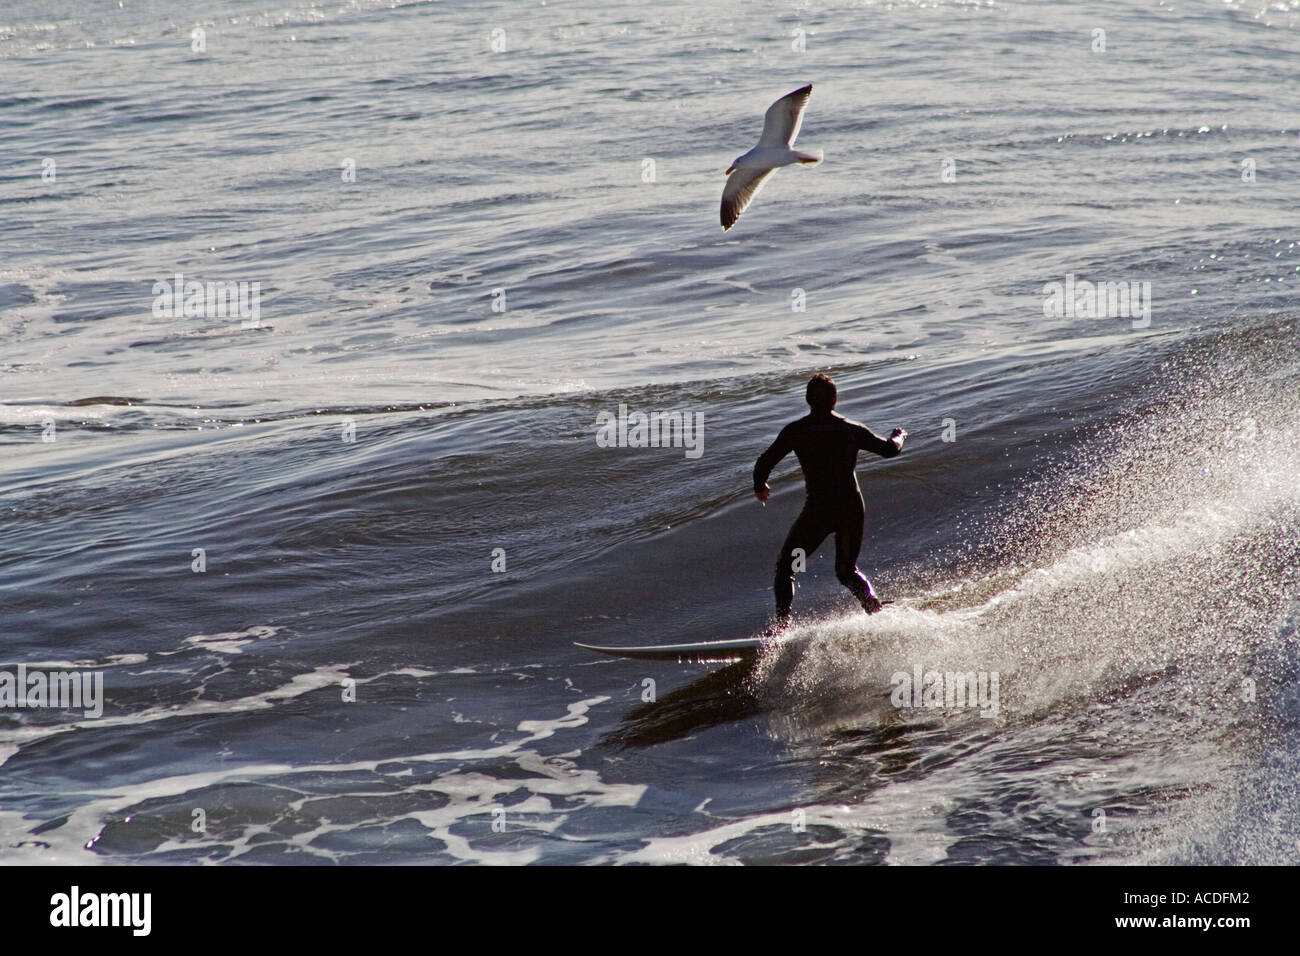 Santa Cruz Surfer Stockfoto